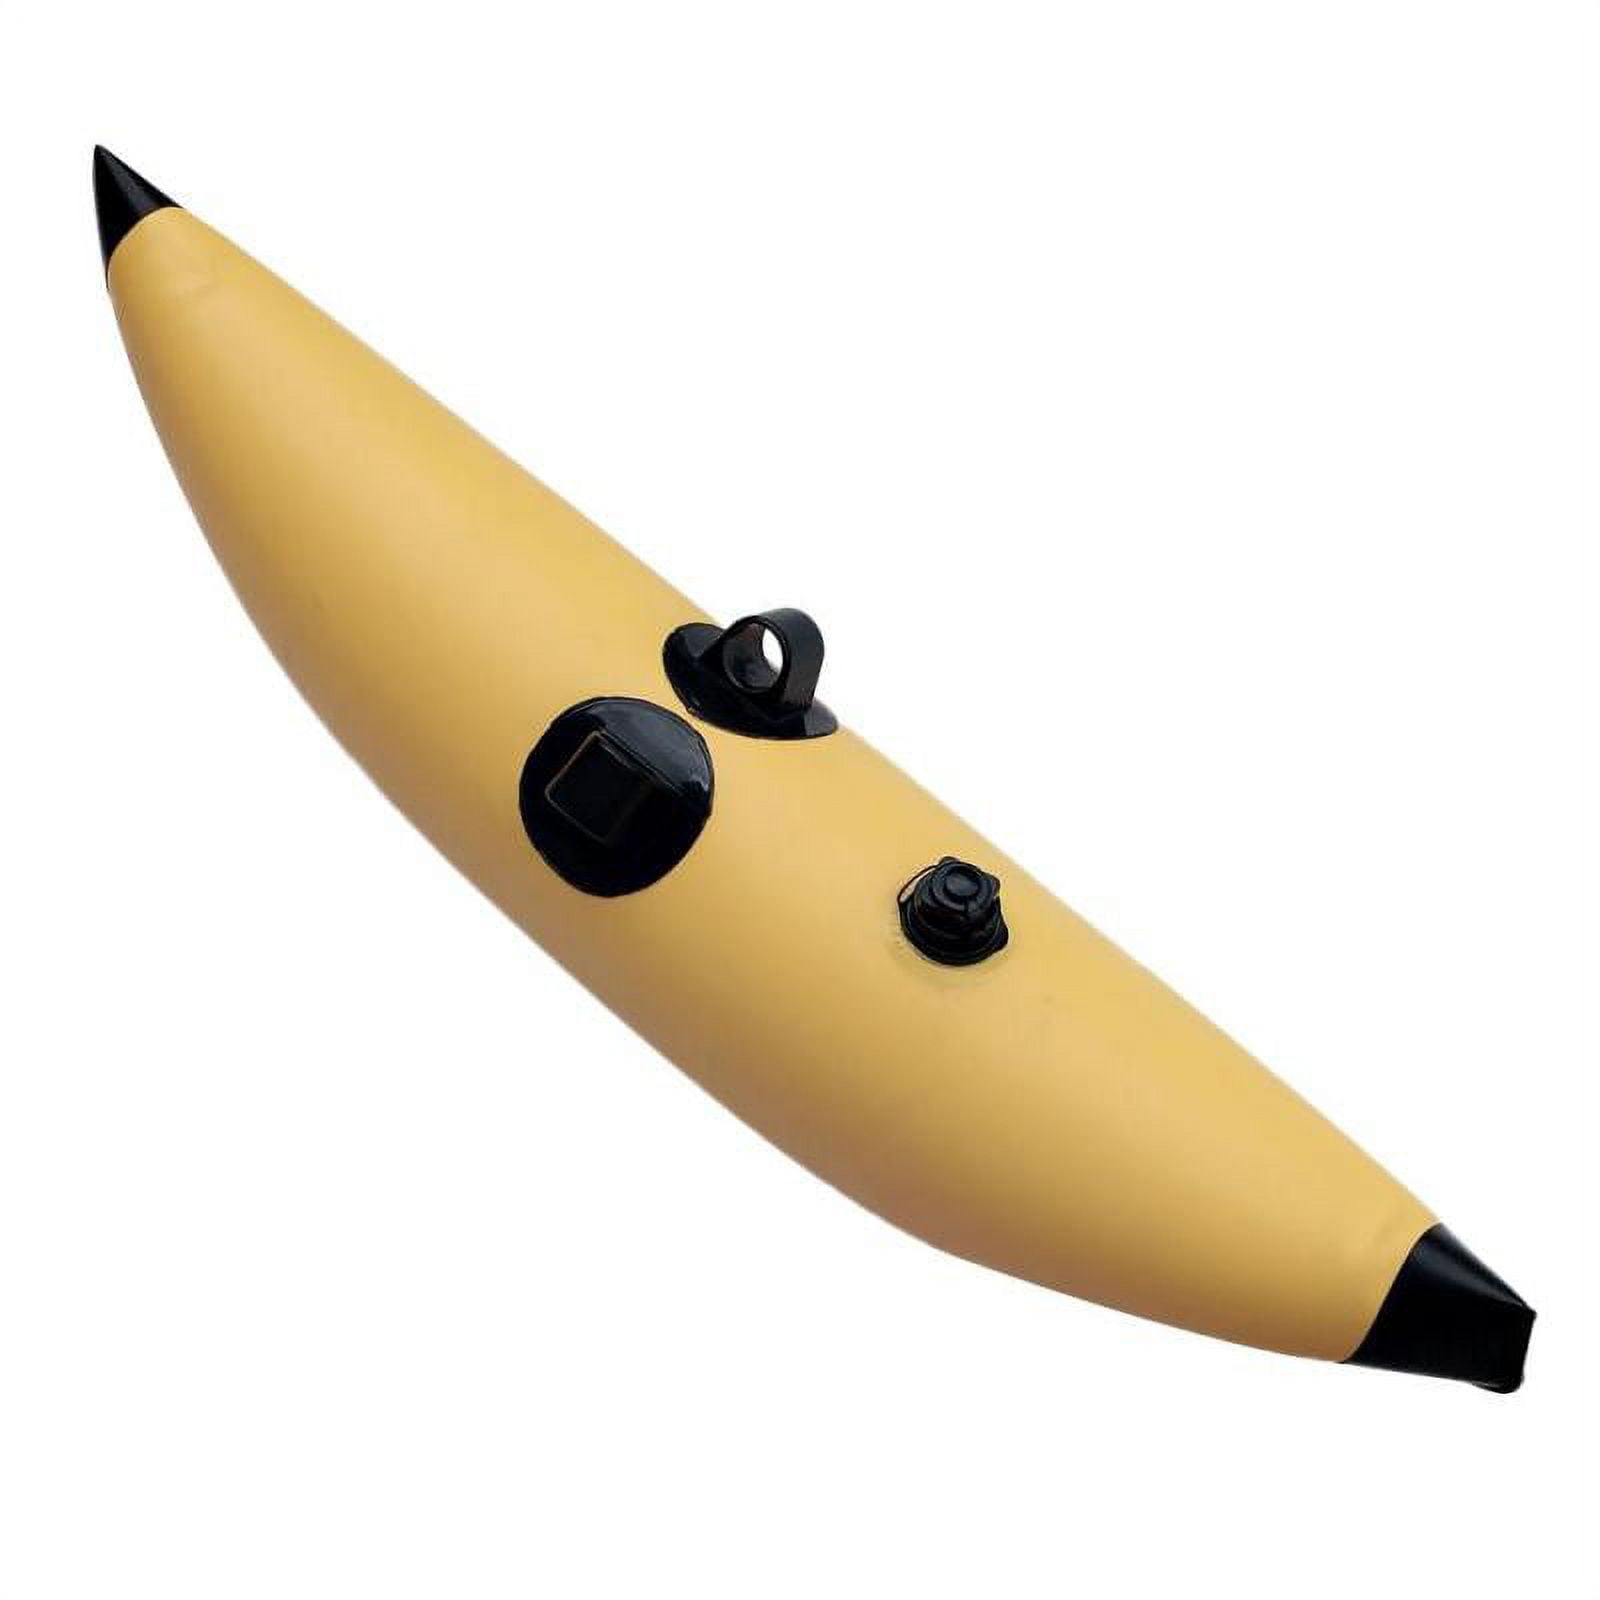 DENEST PVC Kayak Canoe Outrigger Stabilizer Inflatable Pontoon